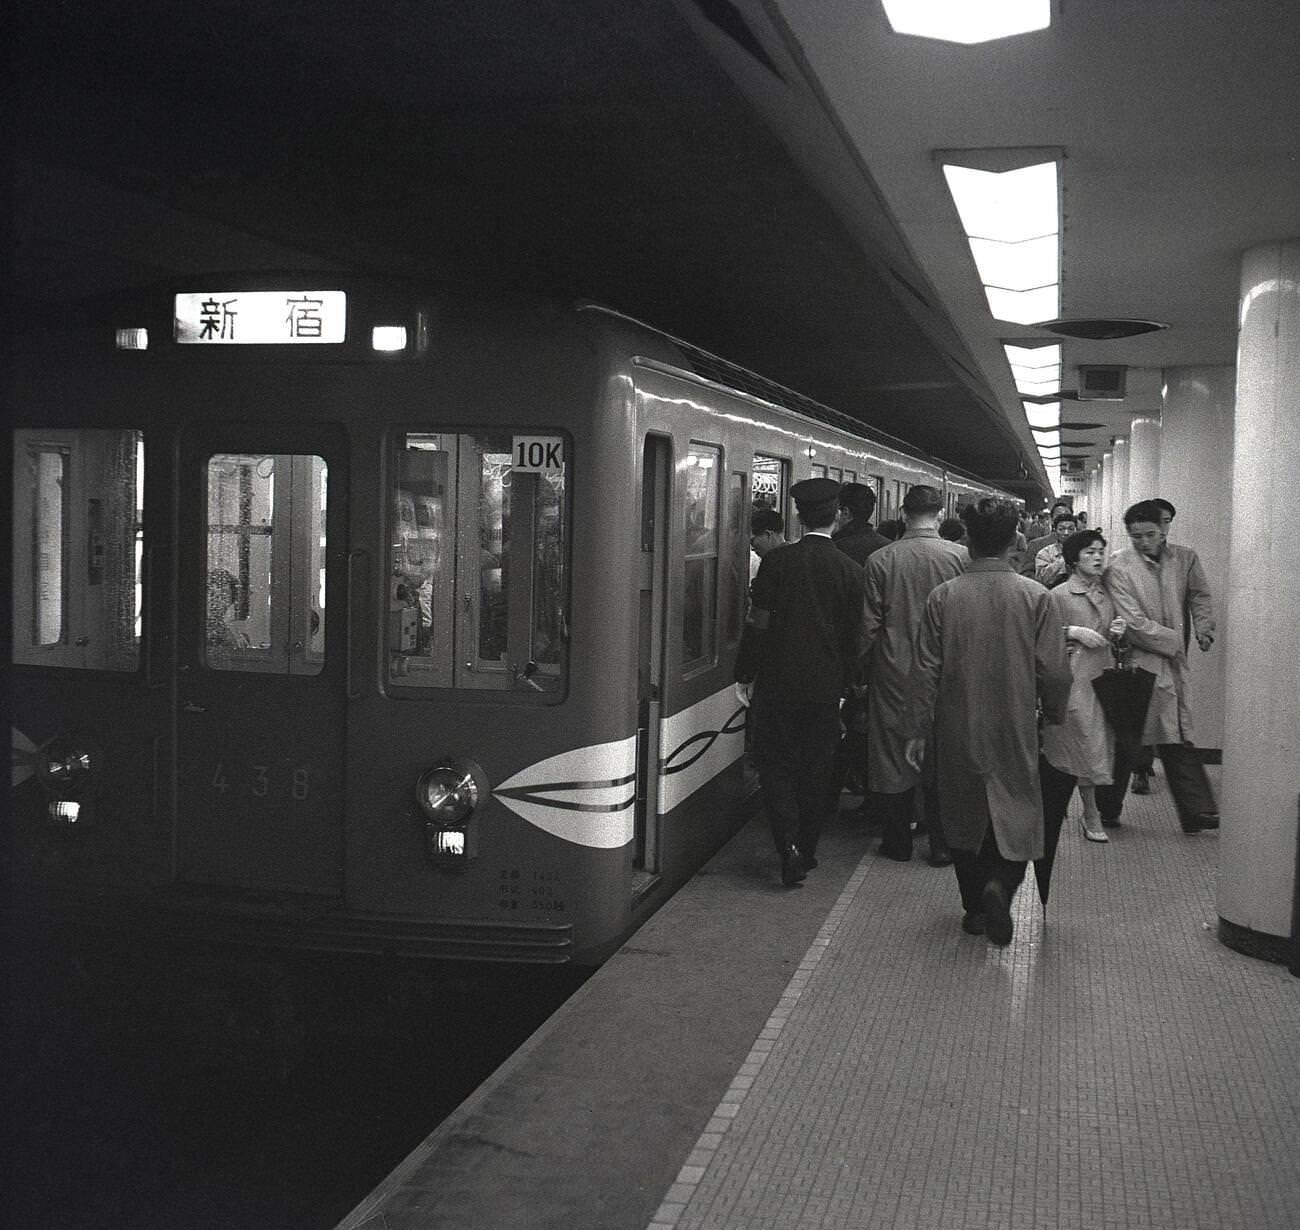 Japanese commuters boarding a metro train in Tokyo, 1950s.